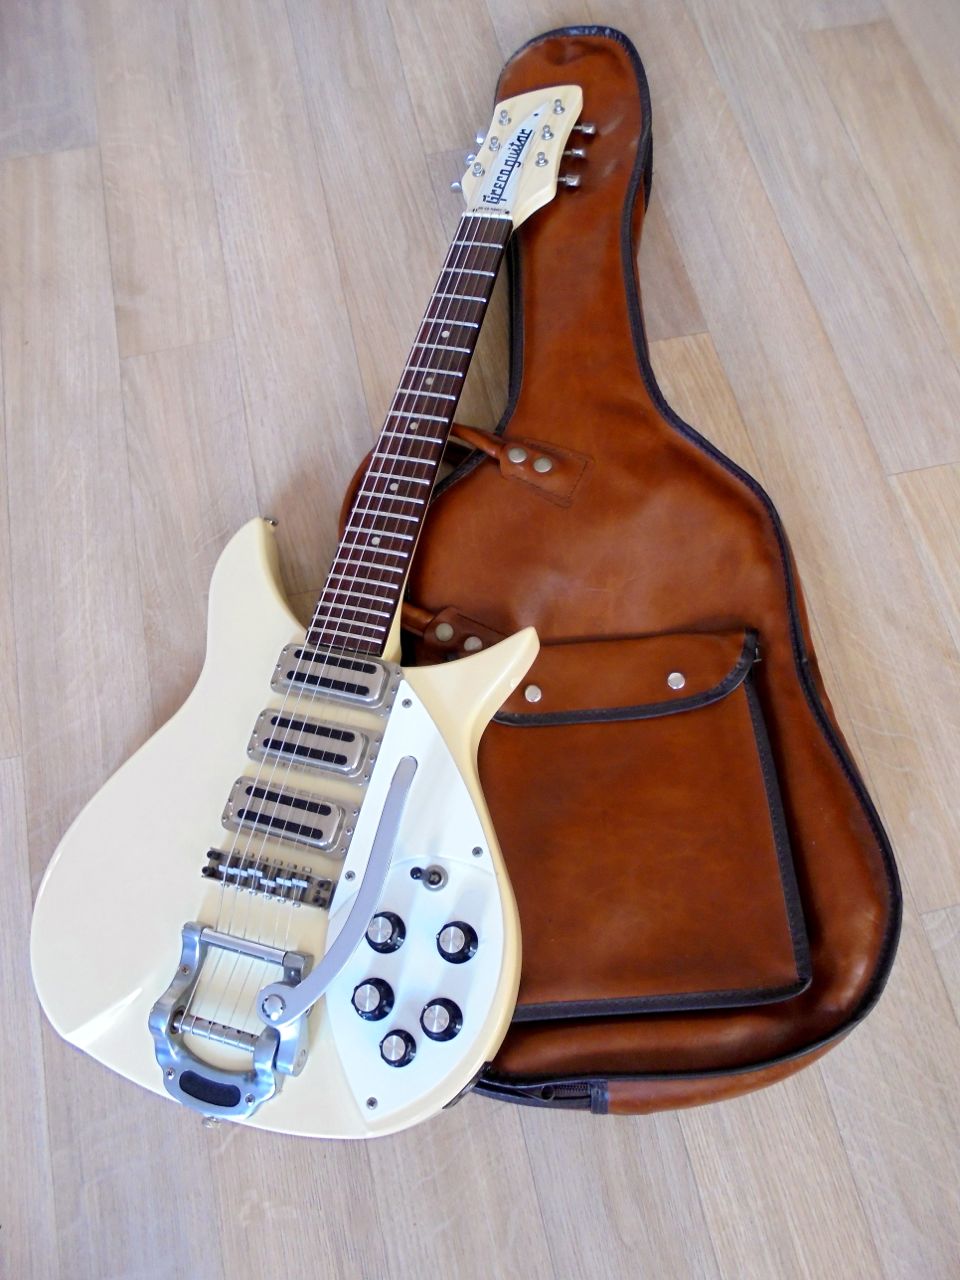 Greco JLG 85 1988 White Guitar For Sale Dear Wood Guitar Boutique